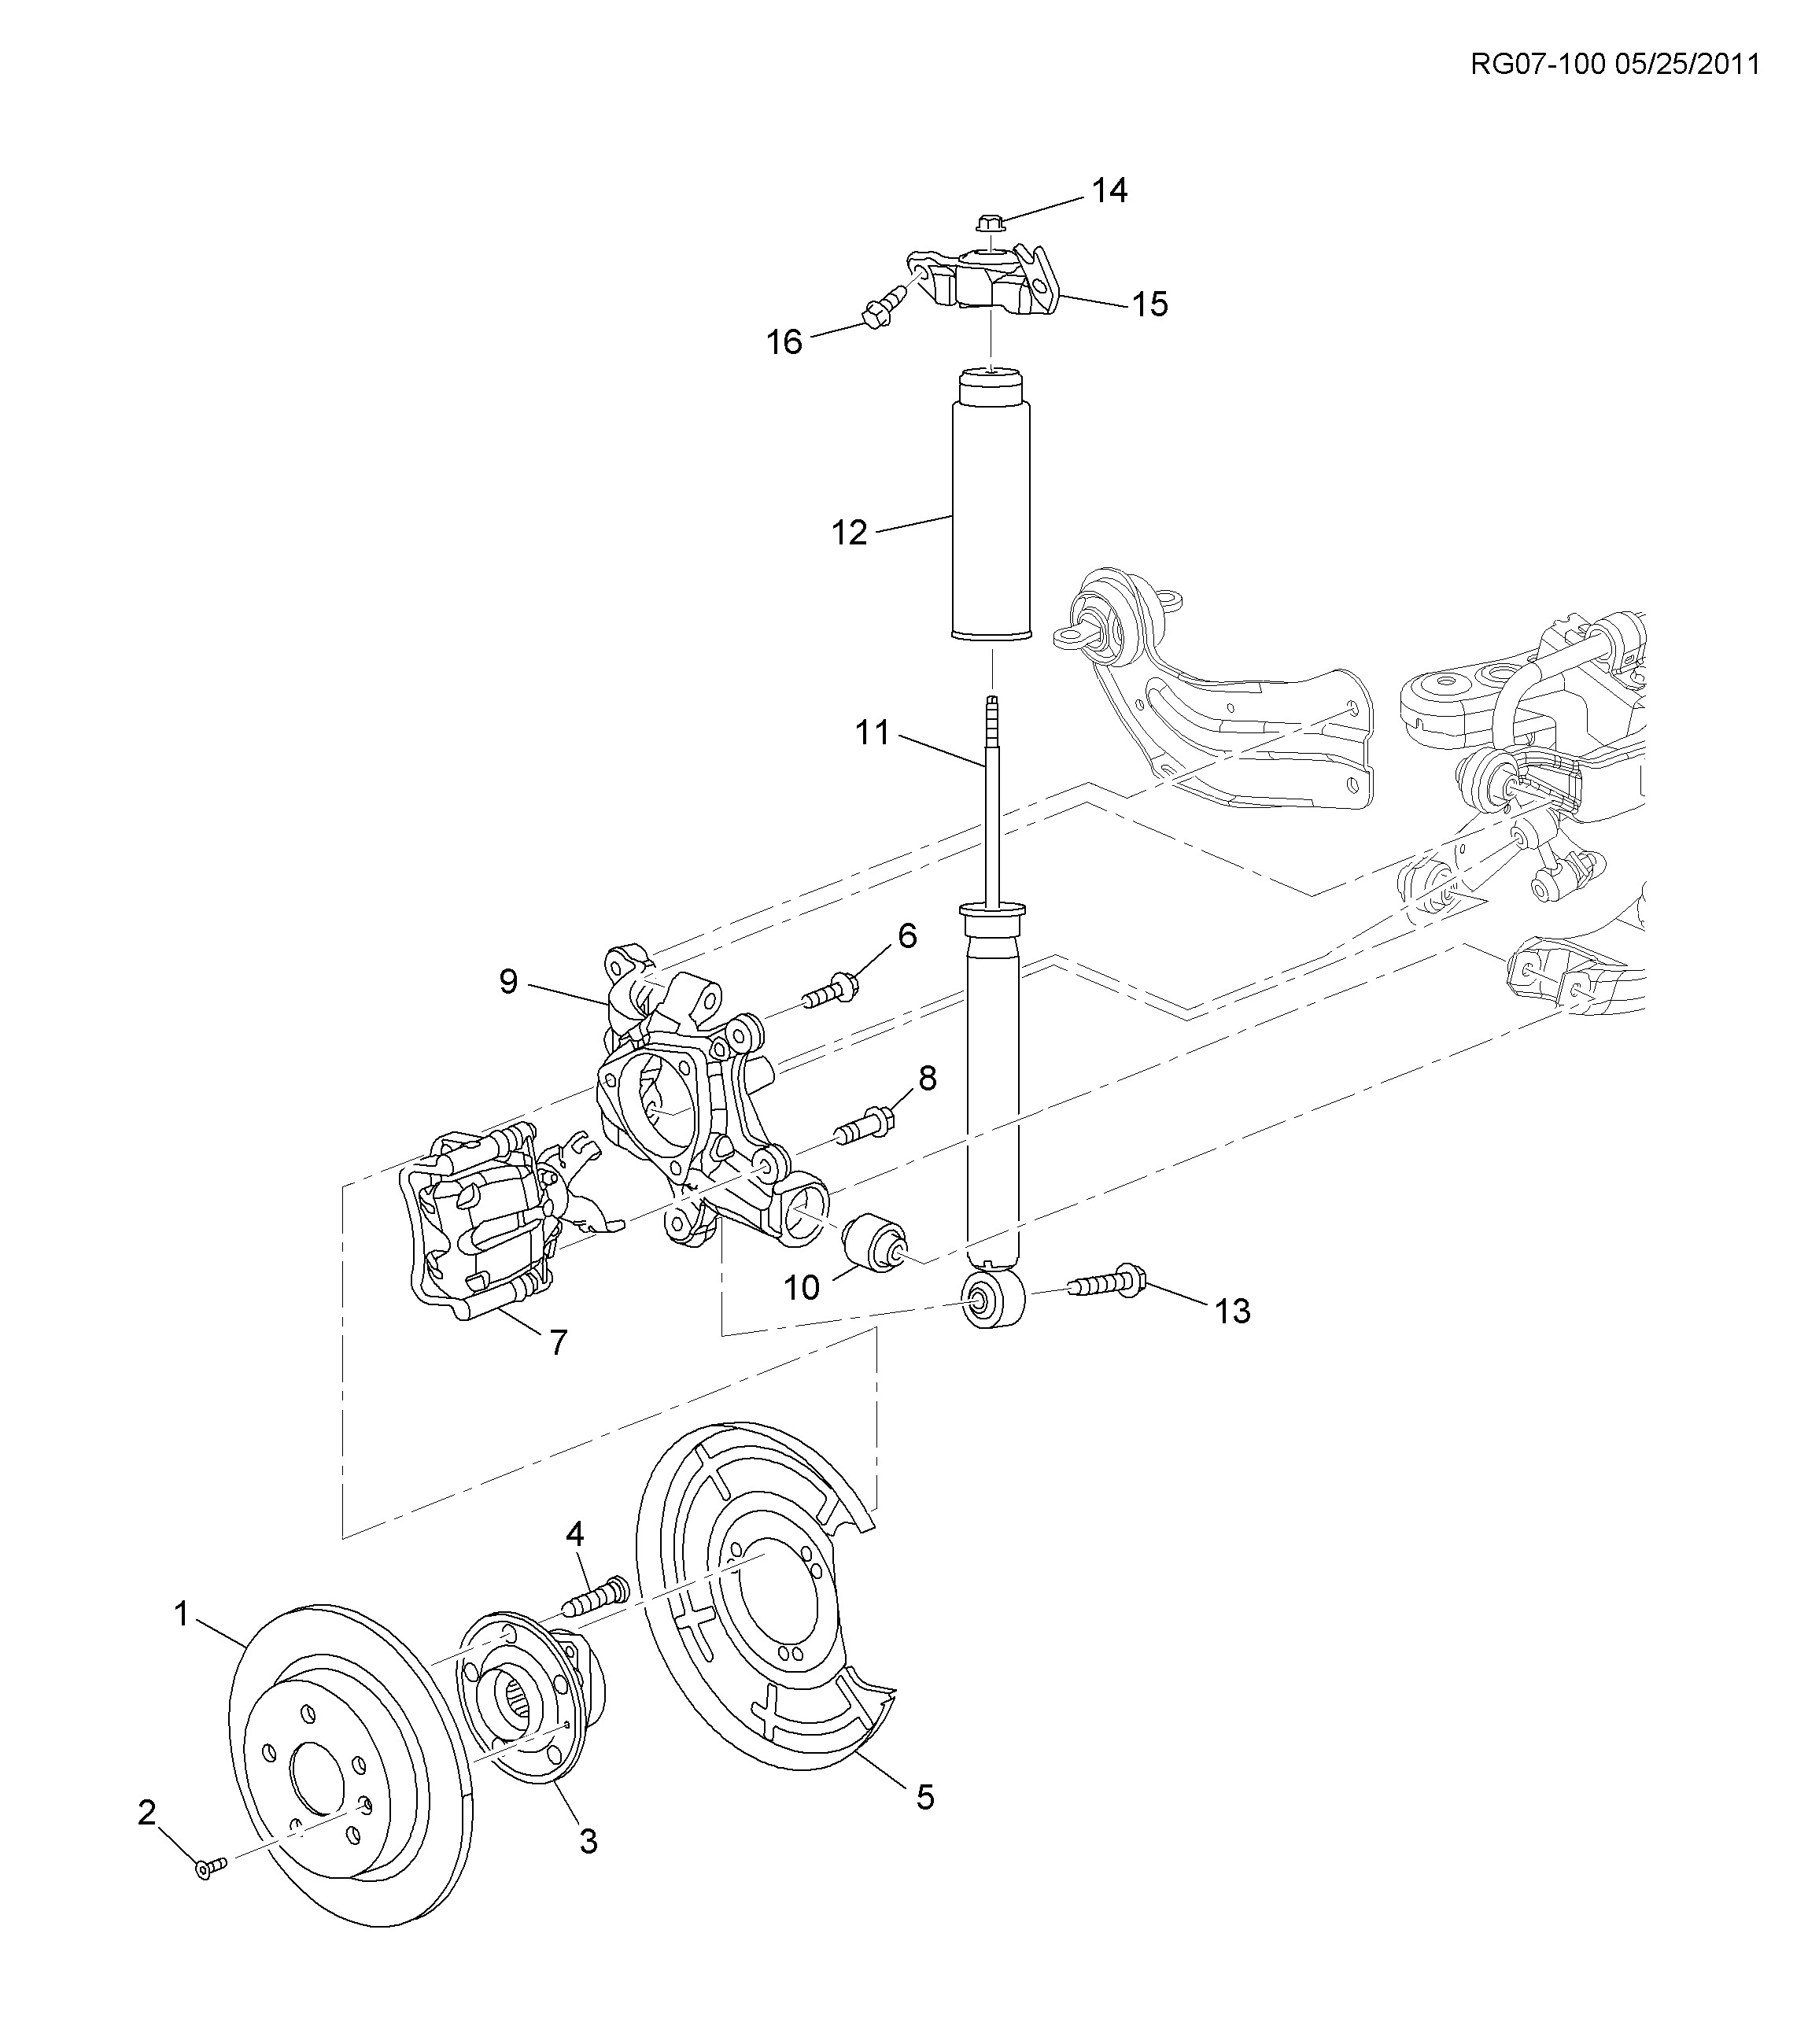 Disc Brake assembly Diagram Malibu Suspension Rear Shocks Hub Disc Brakes Chevrolet Epc Of Disc Brake assembly Diagram